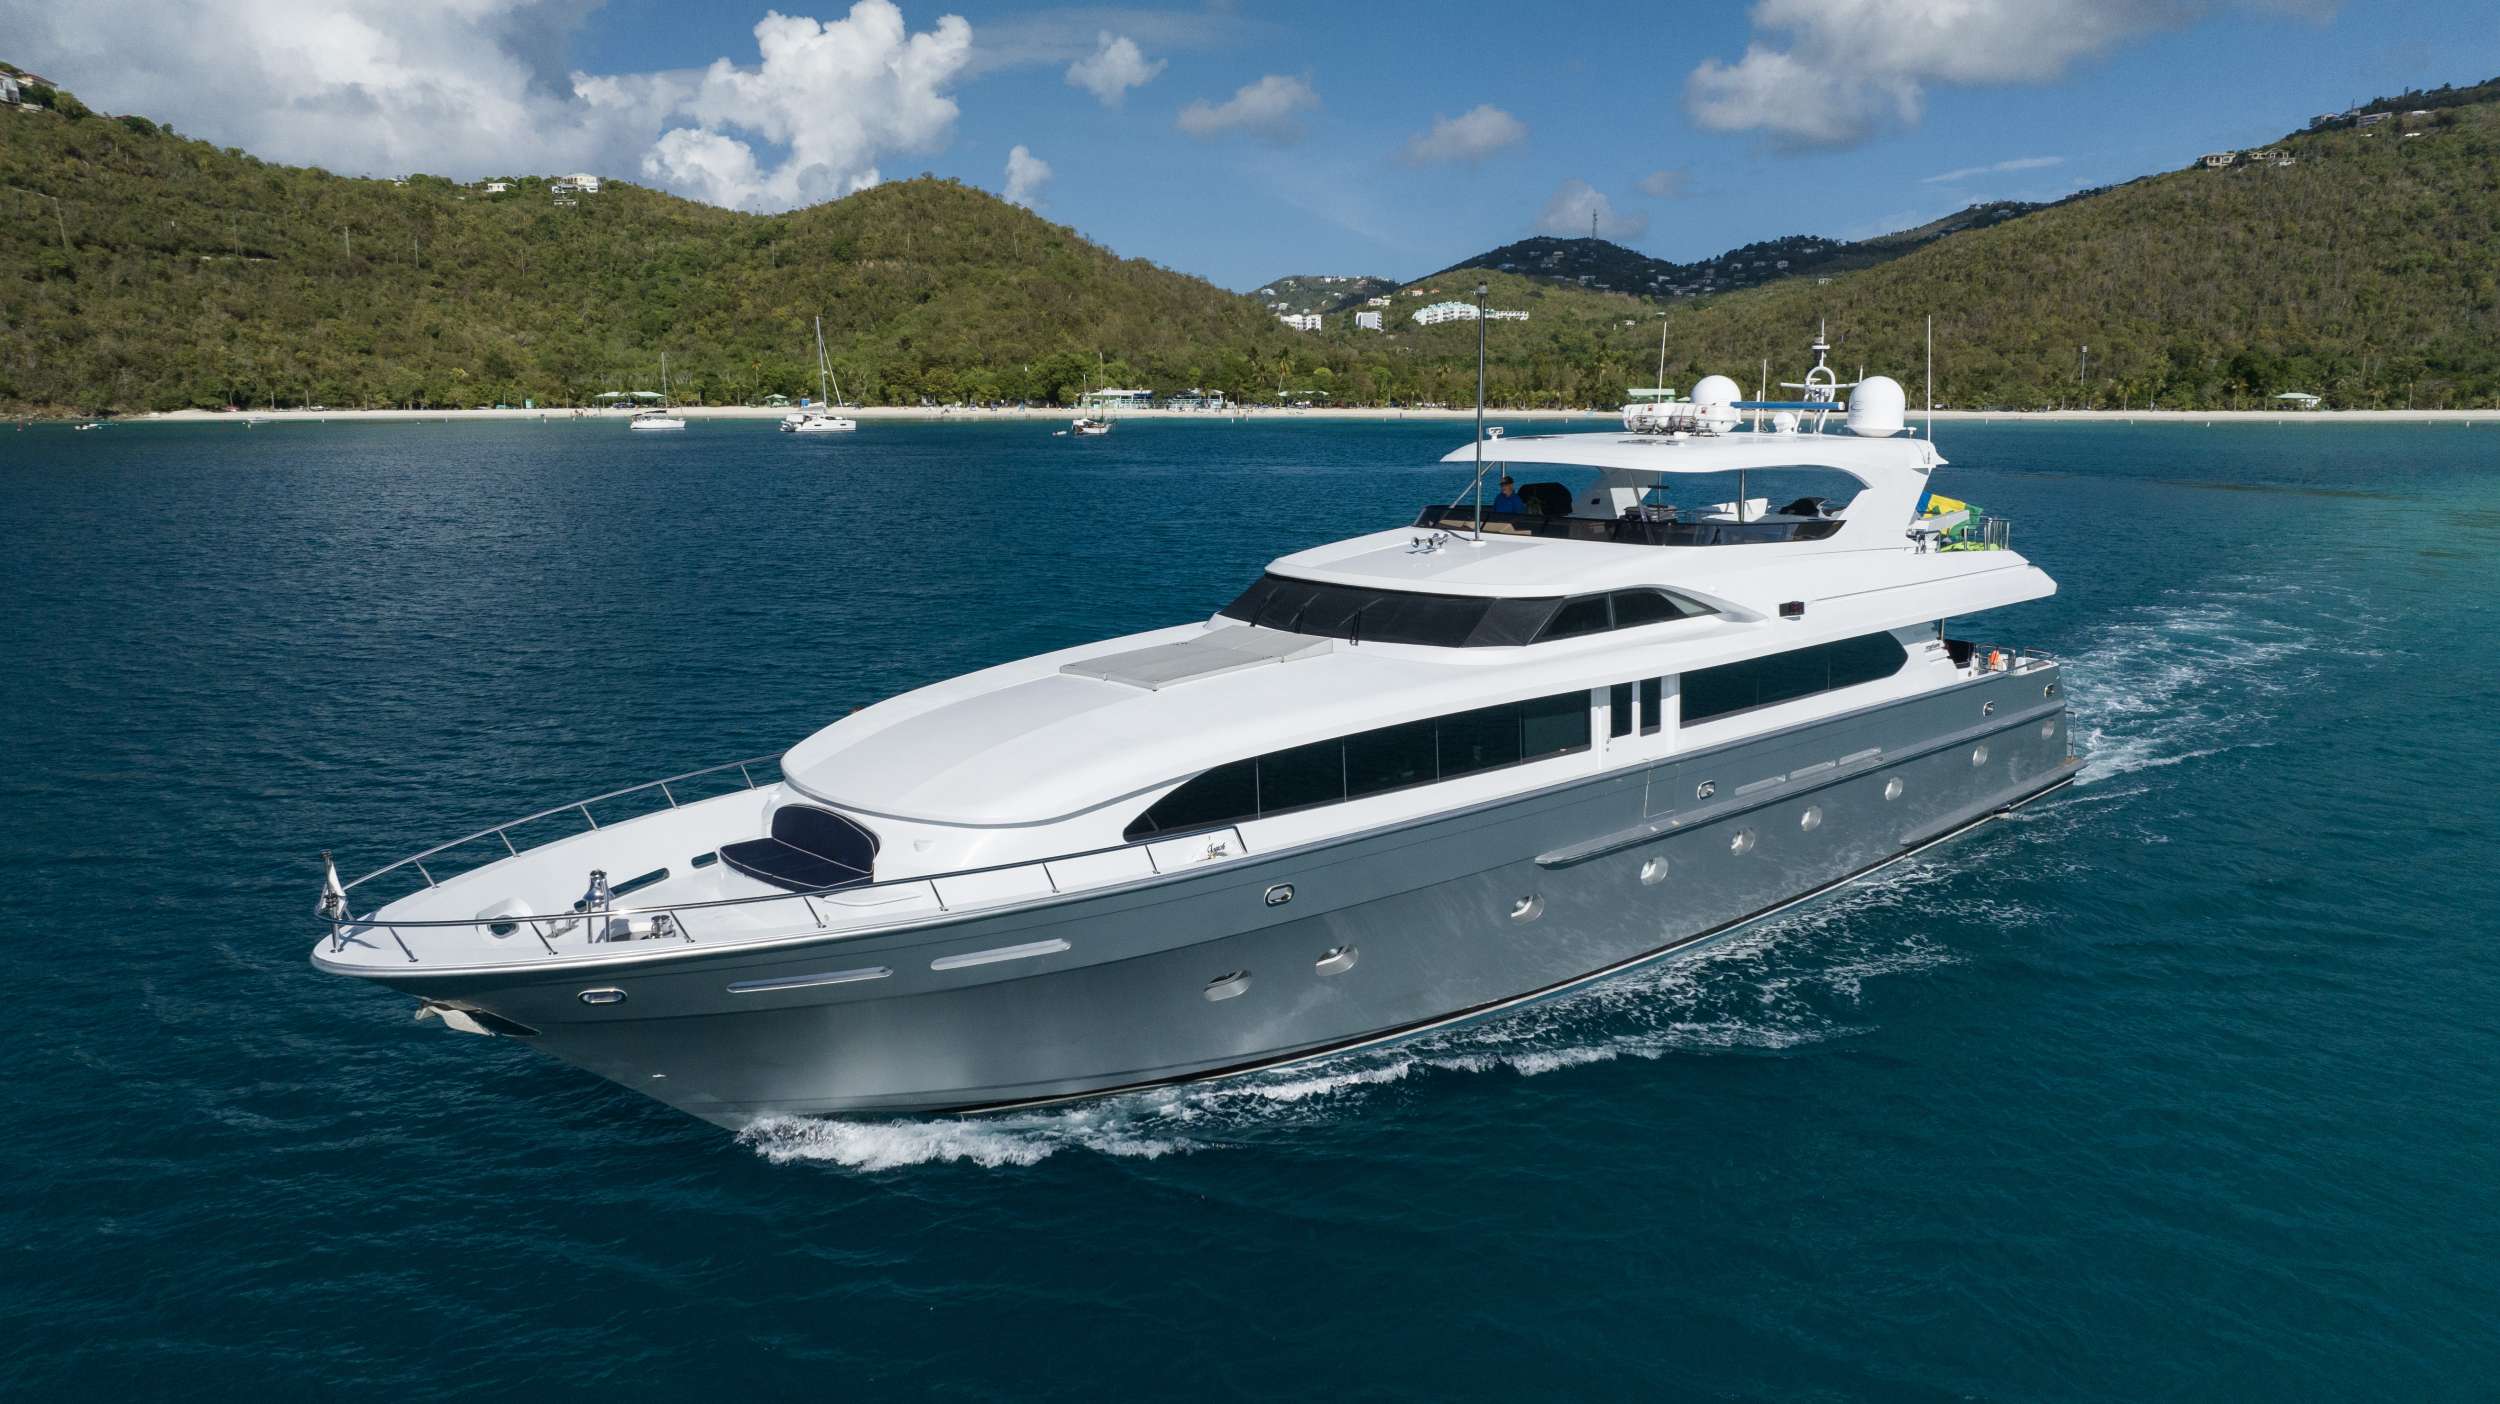 Outta Touch Luxury Intermarine 105 Yacht Charter Cruising the Virgin Islands